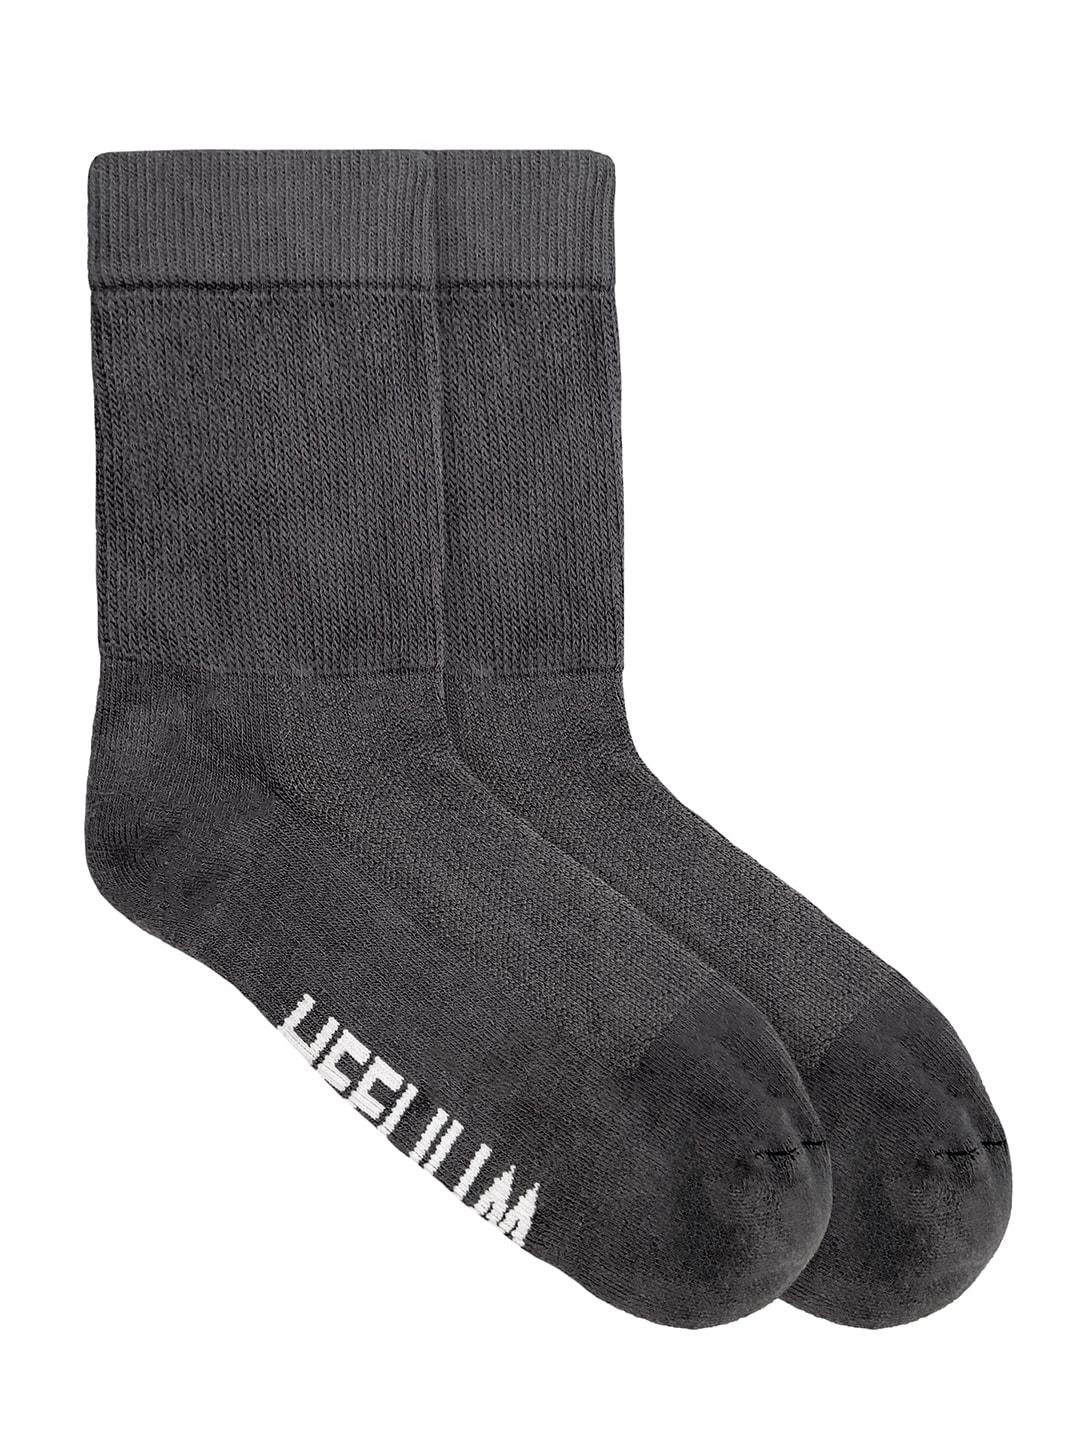 Heelium Unisex Grey Solid Calf Length Socks